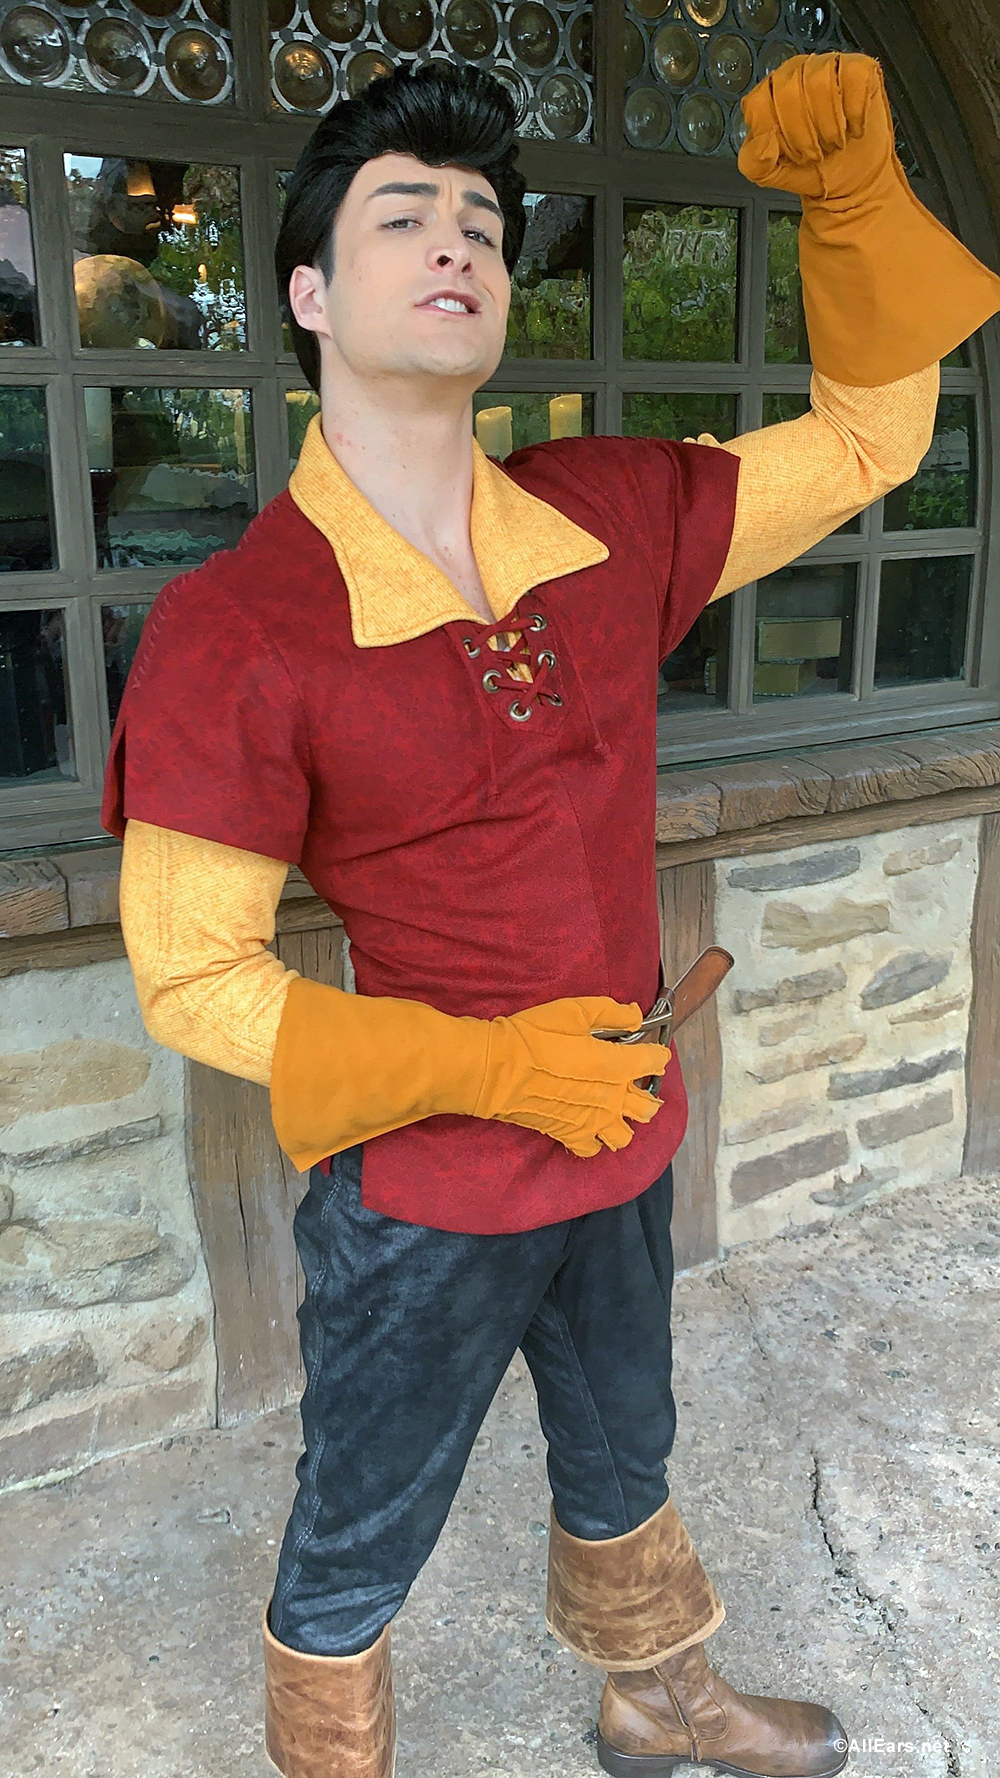 Gaston in Magic Kingdom's Fantasyland Debuts New Look! - AllEars.Net